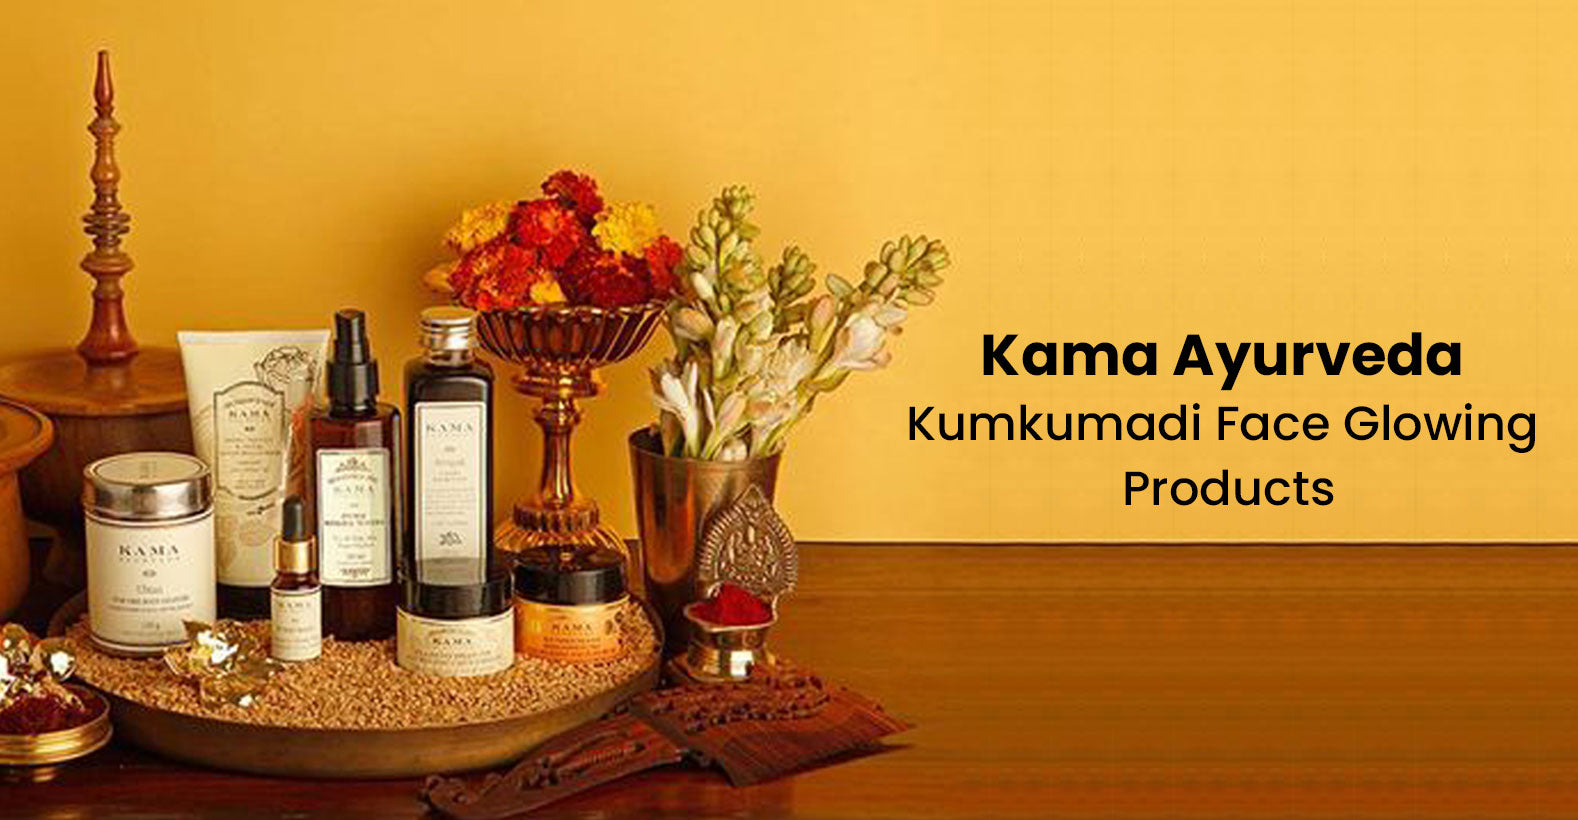 6 Best Kama Ayurveda Kumkumadi Face Glowing Products For Your Skin